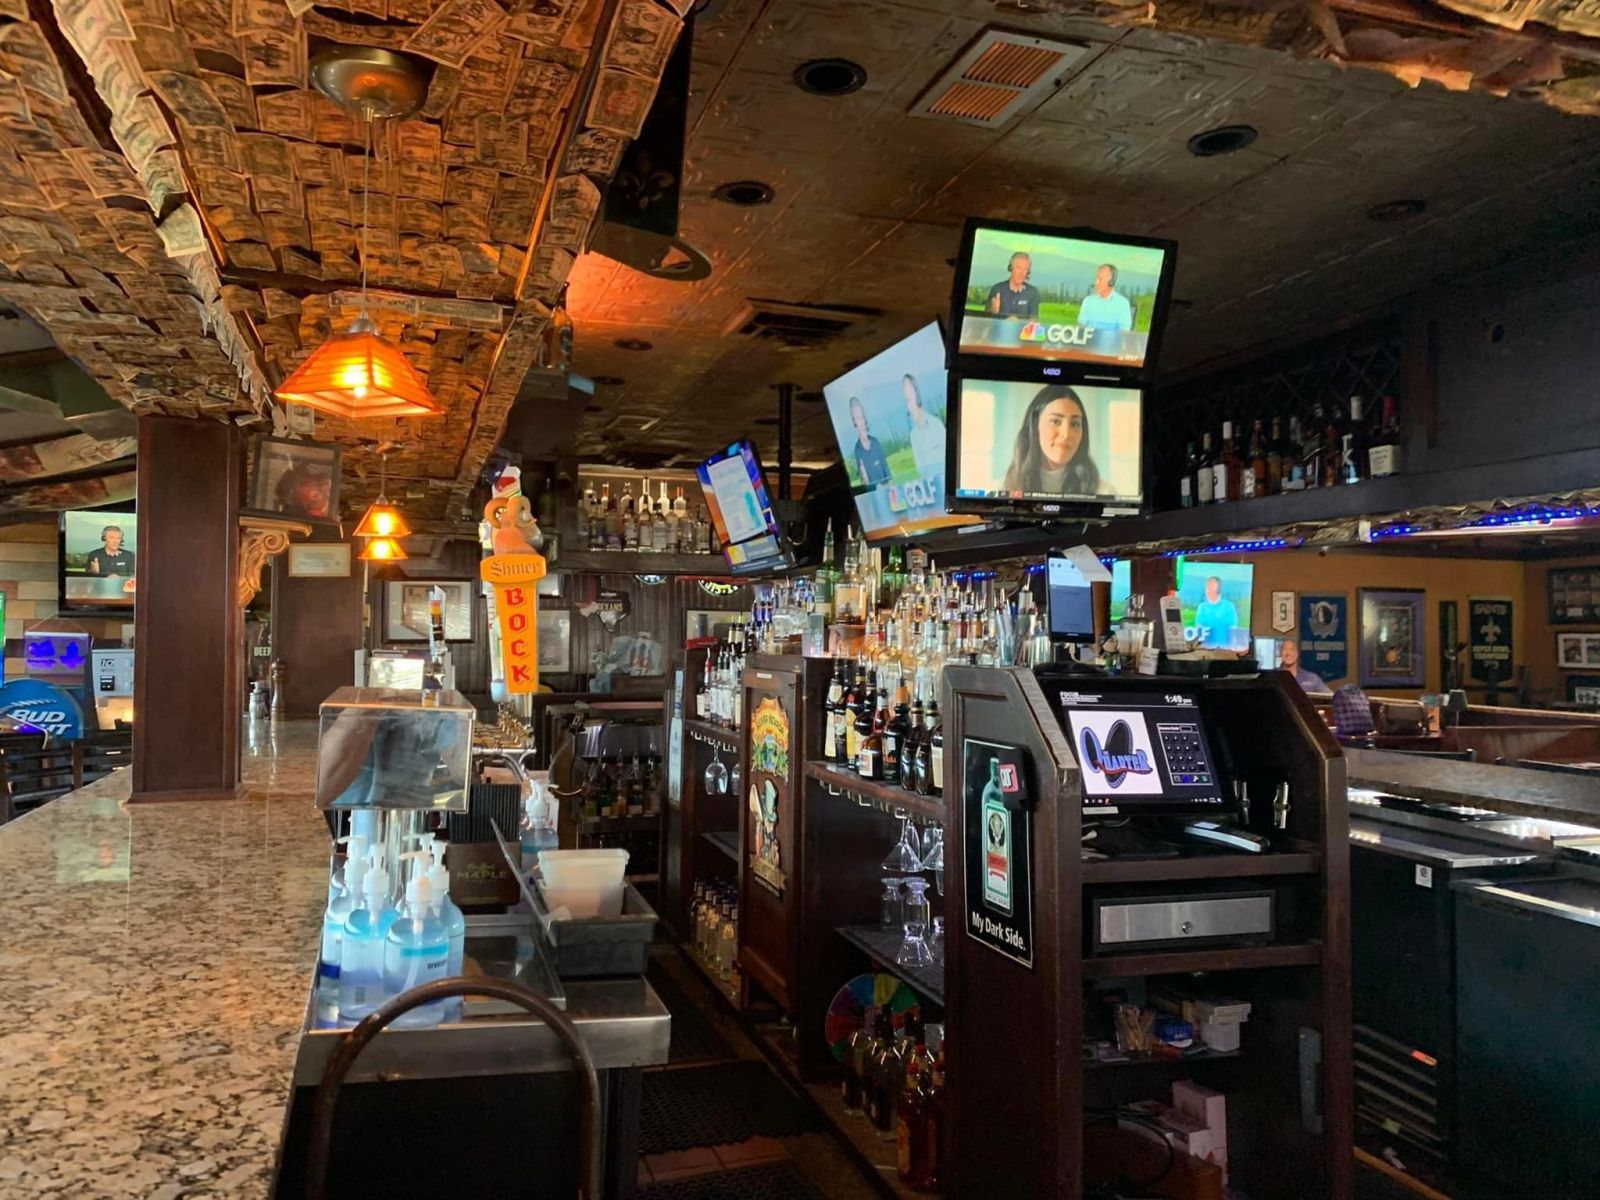 Interior shot of the bar